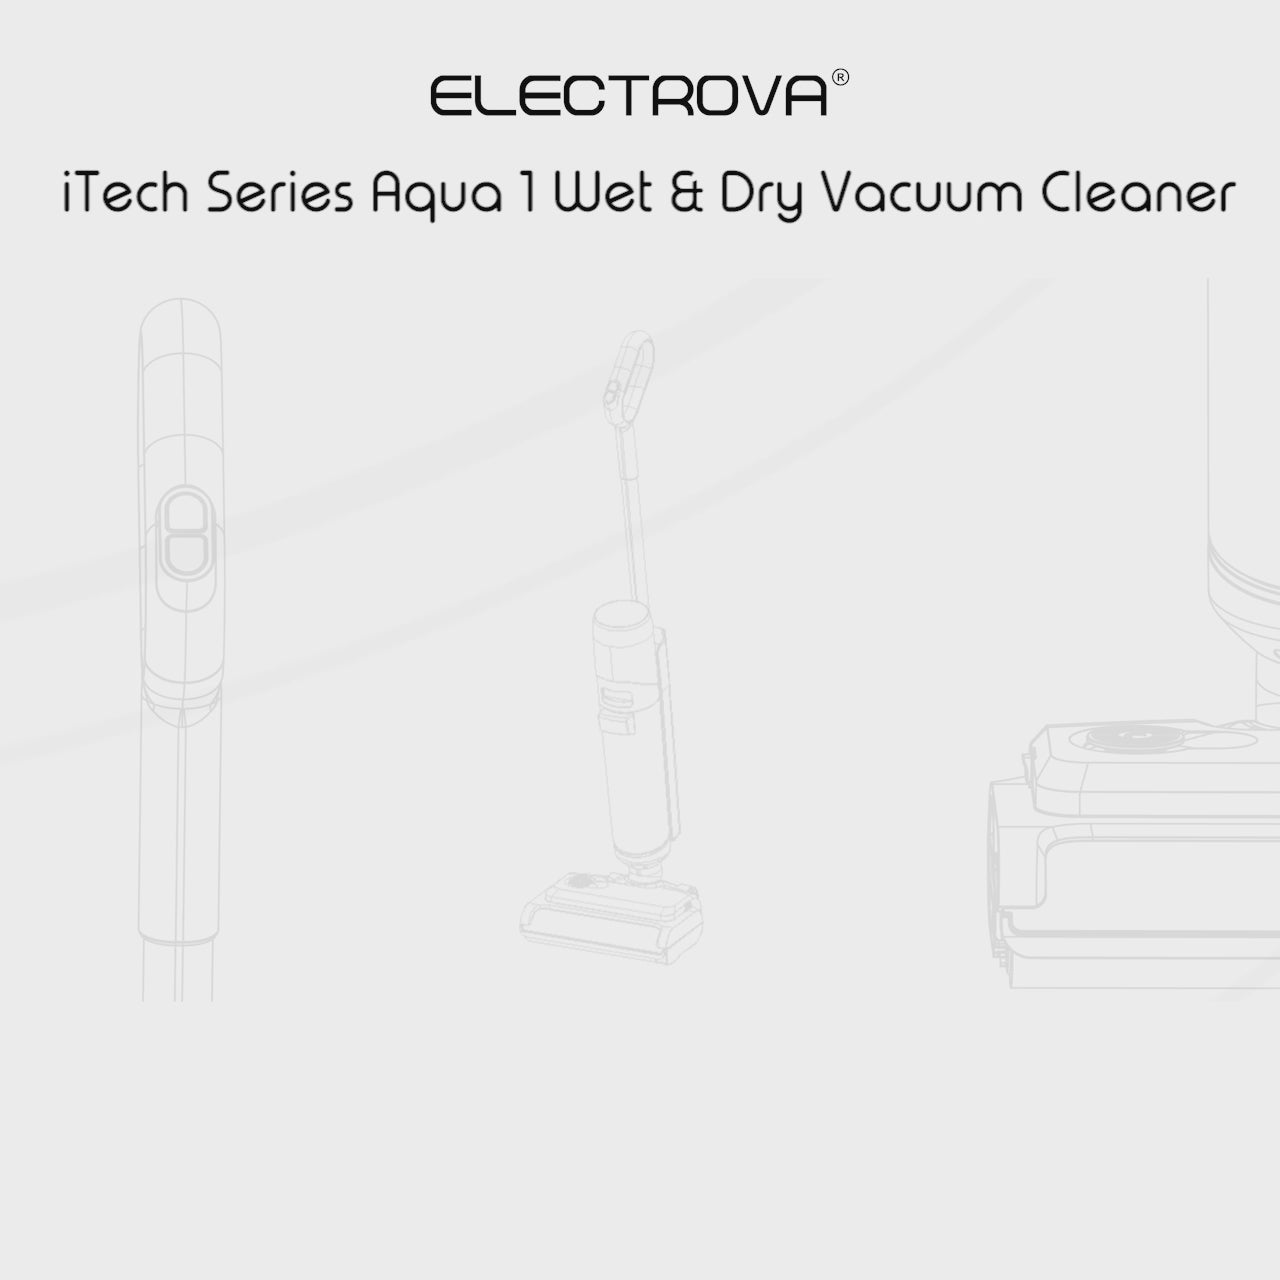 Electrova iTech Series Wet & Dry Vacuum Cleaner AQUA1